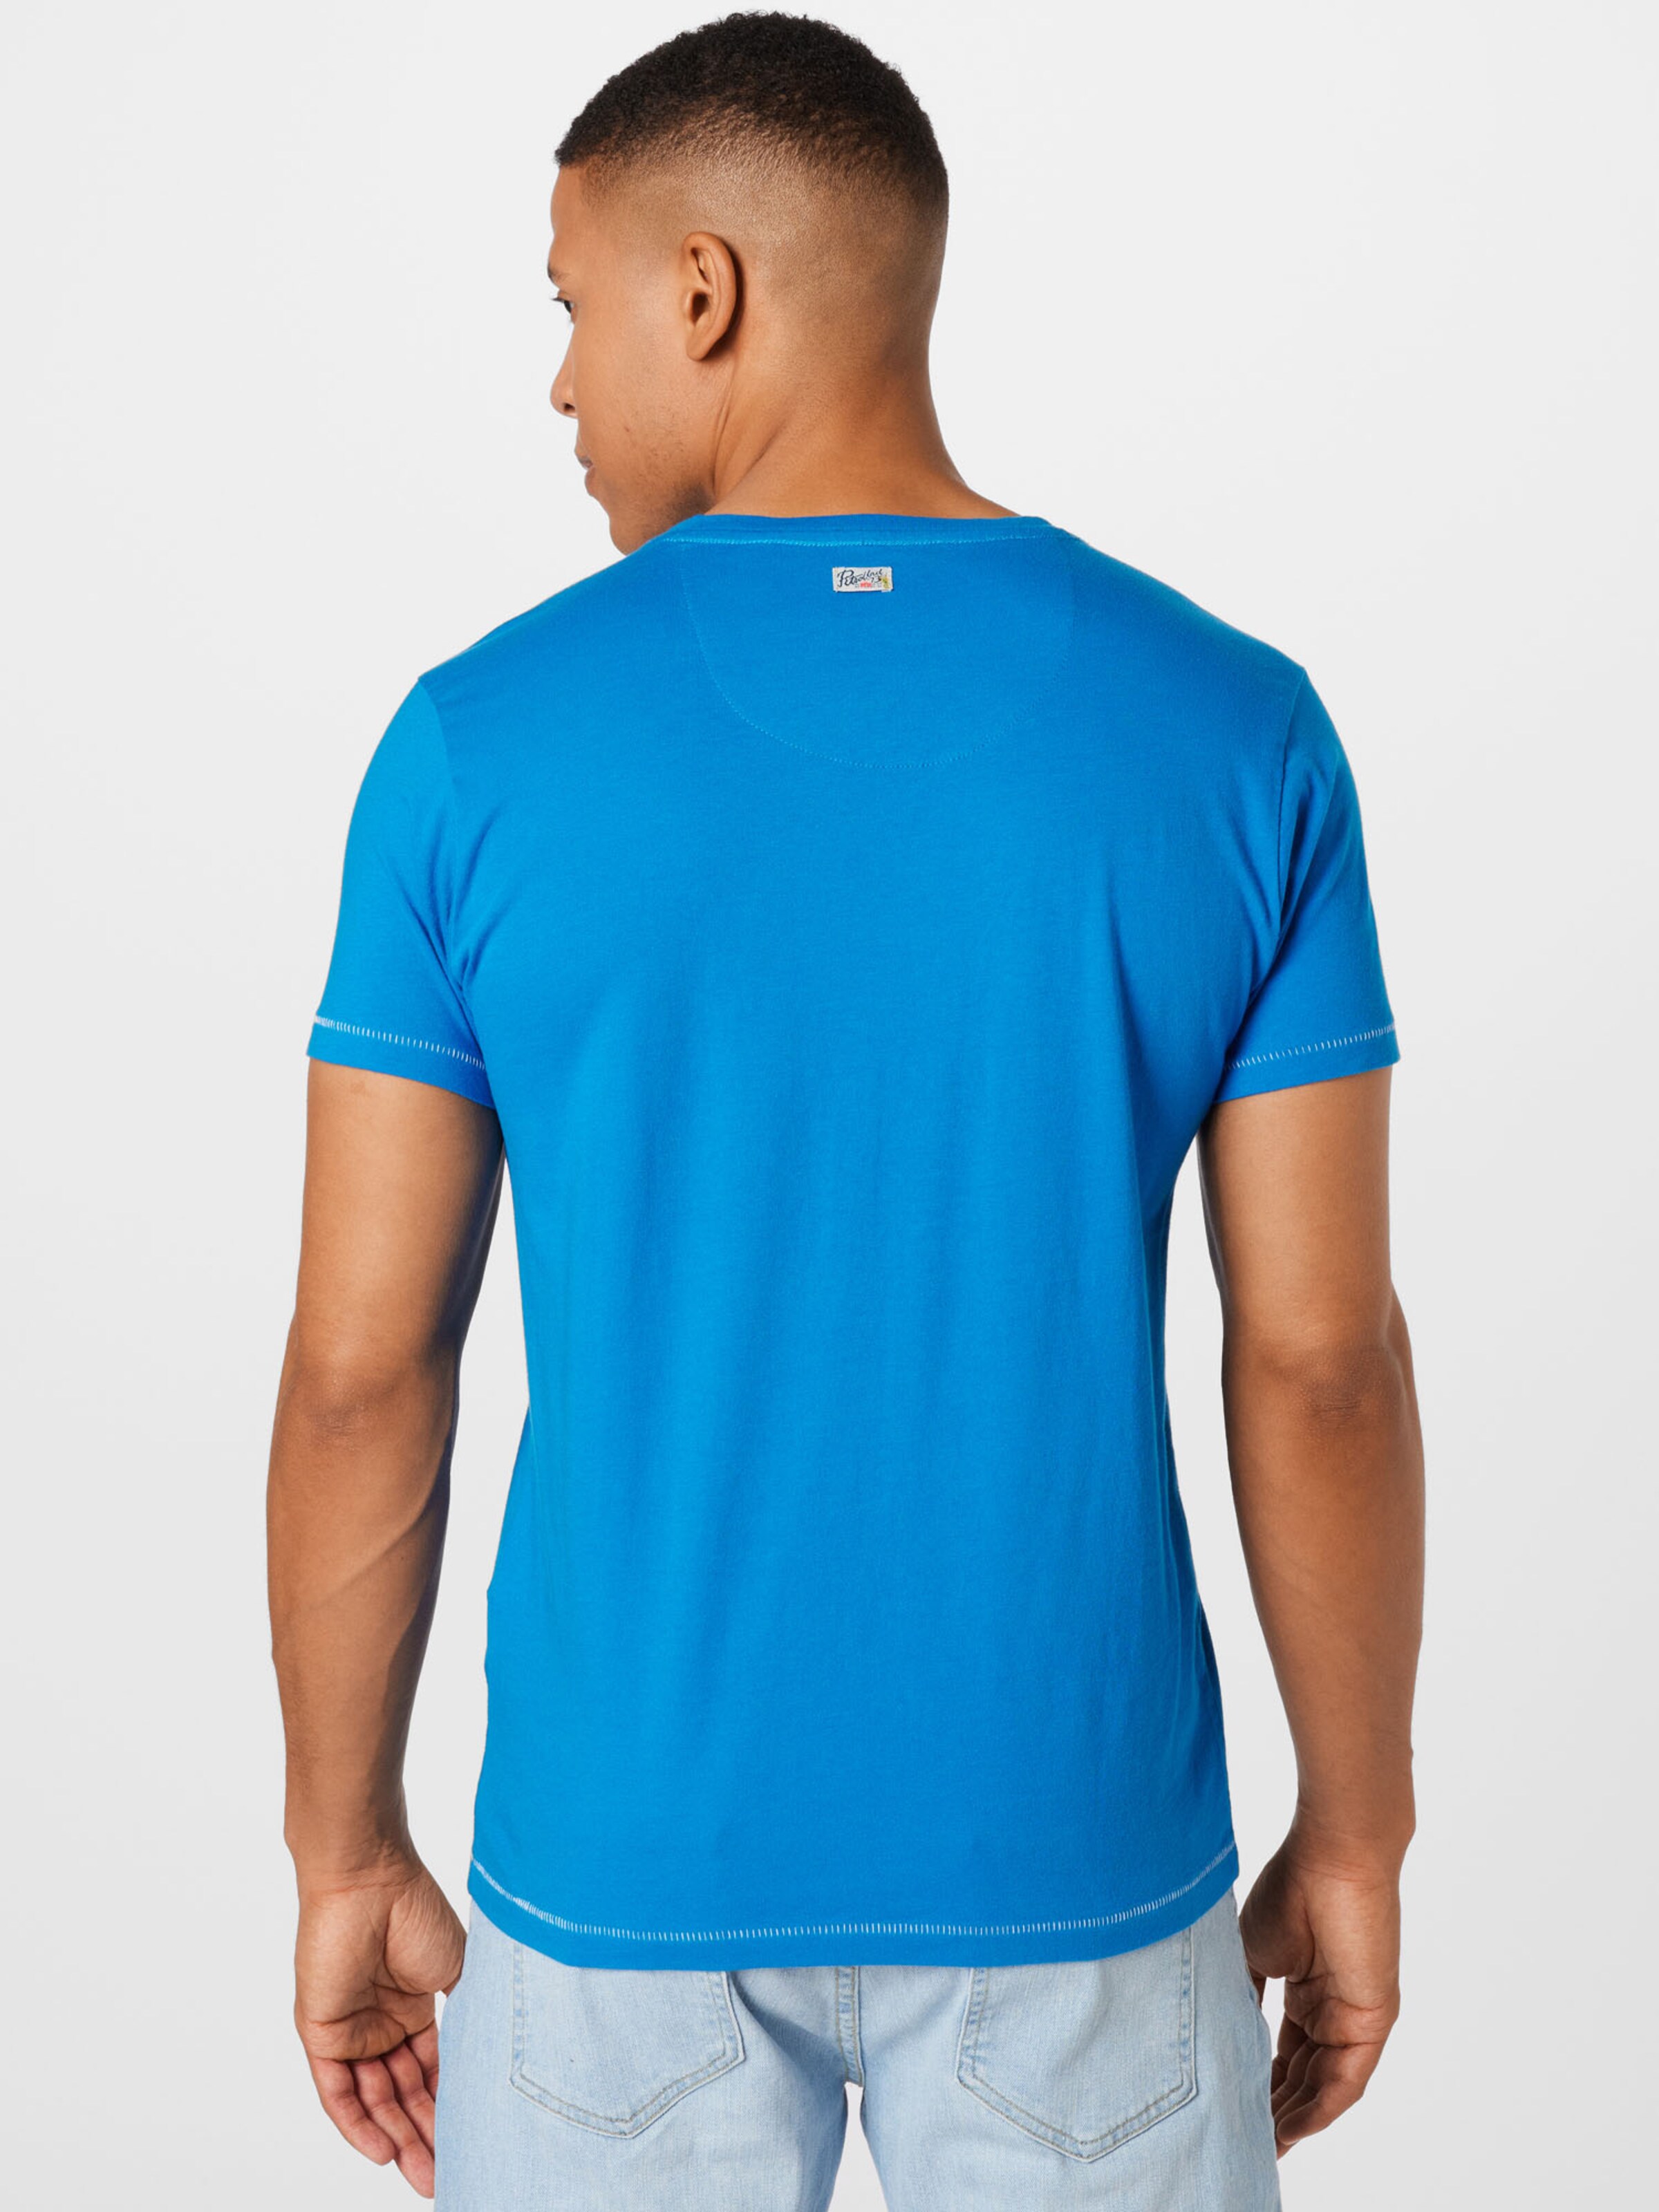 Männer Shirts Petrol Industries T-Shirt in Blau - JP17685